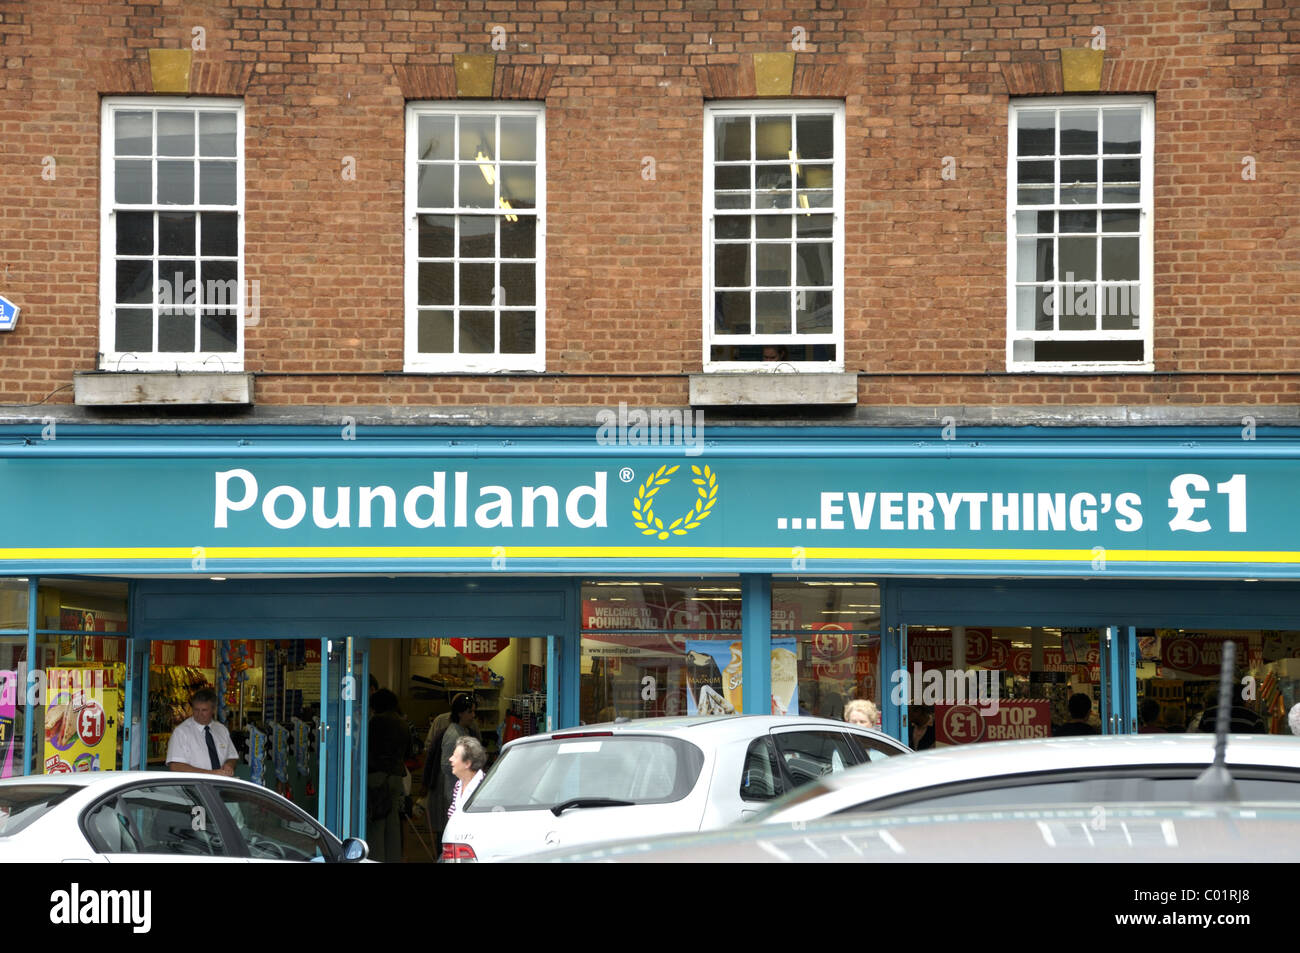 Poundland where everything is £1. Stock Photo